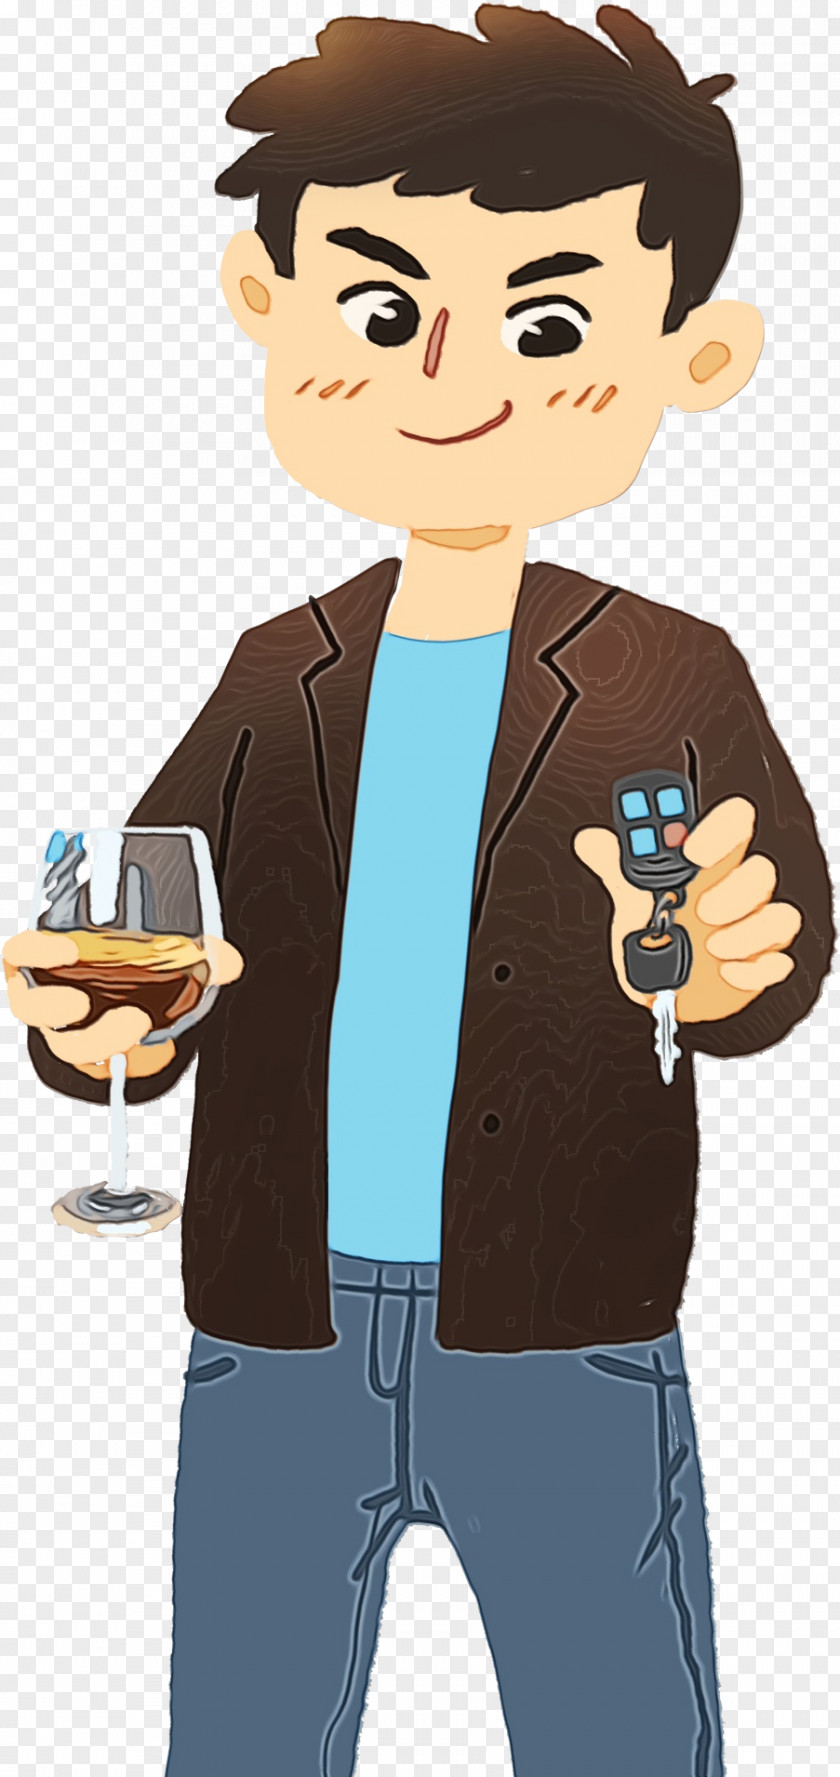 Bartender Drinking Cartoon Drink Alcohol PNG